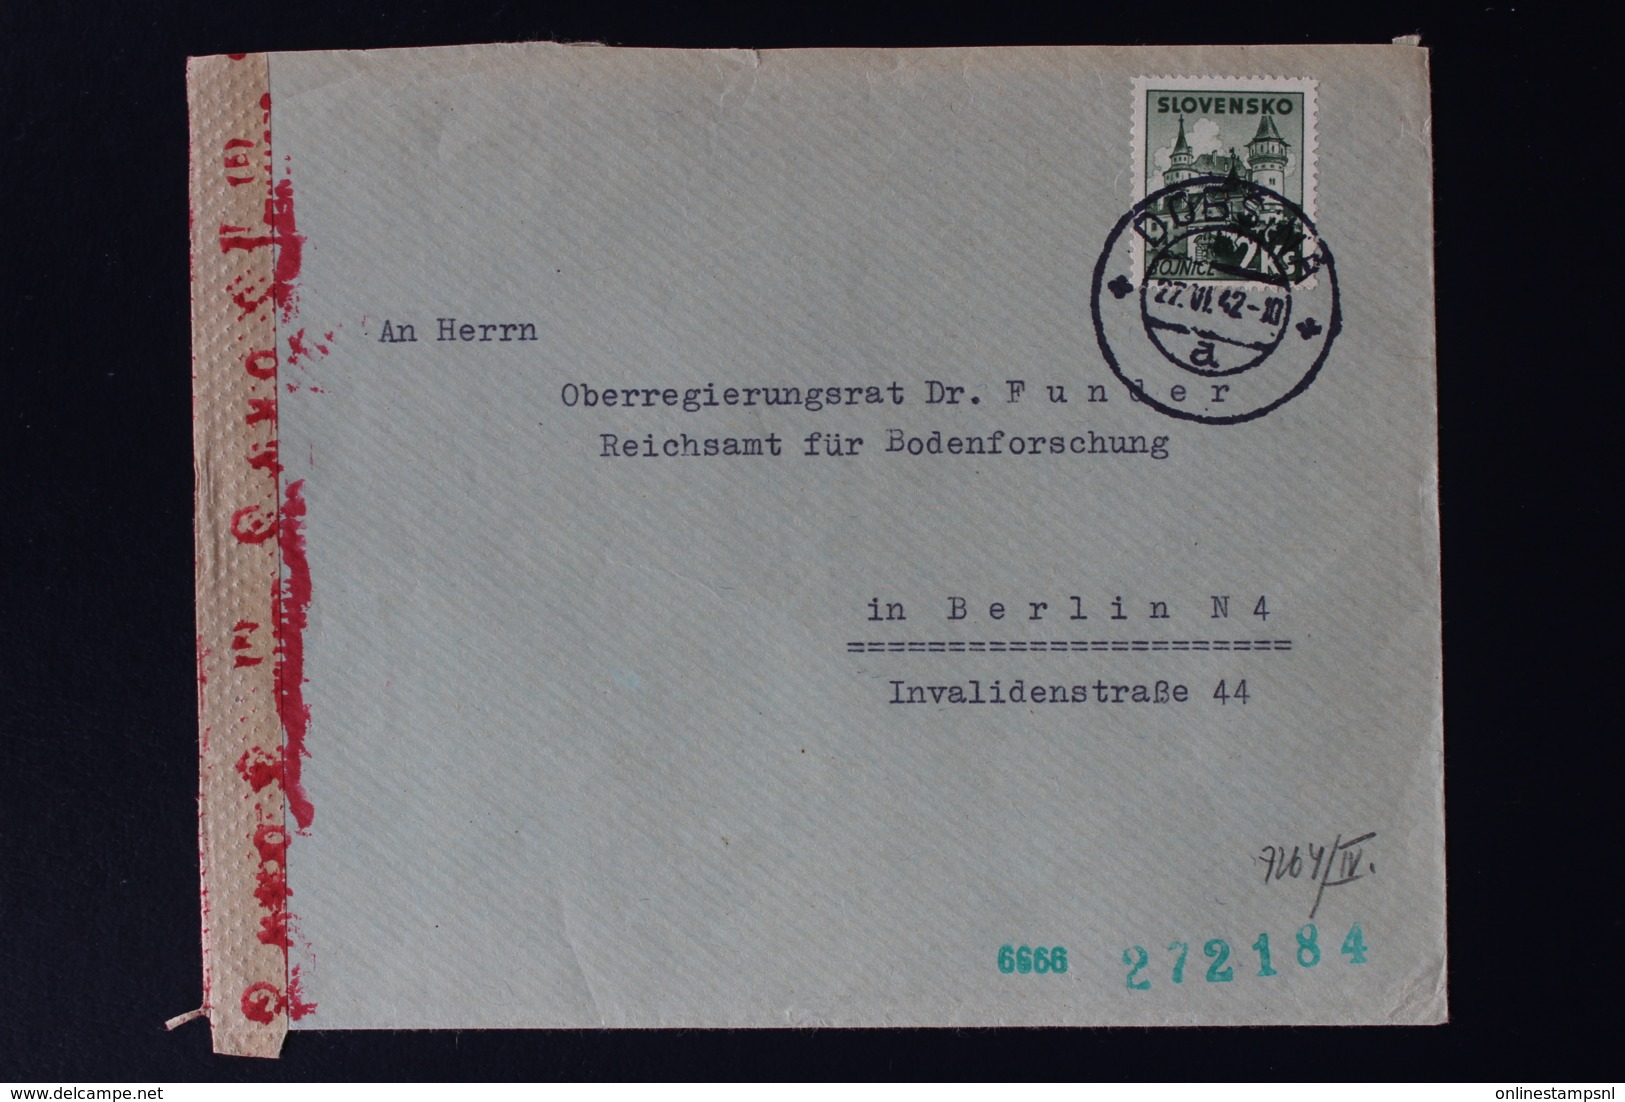 Slovakia Slowakei Cover Dobschau  Coburgwerke To Berlin  1942 Censored - Covers & Documents